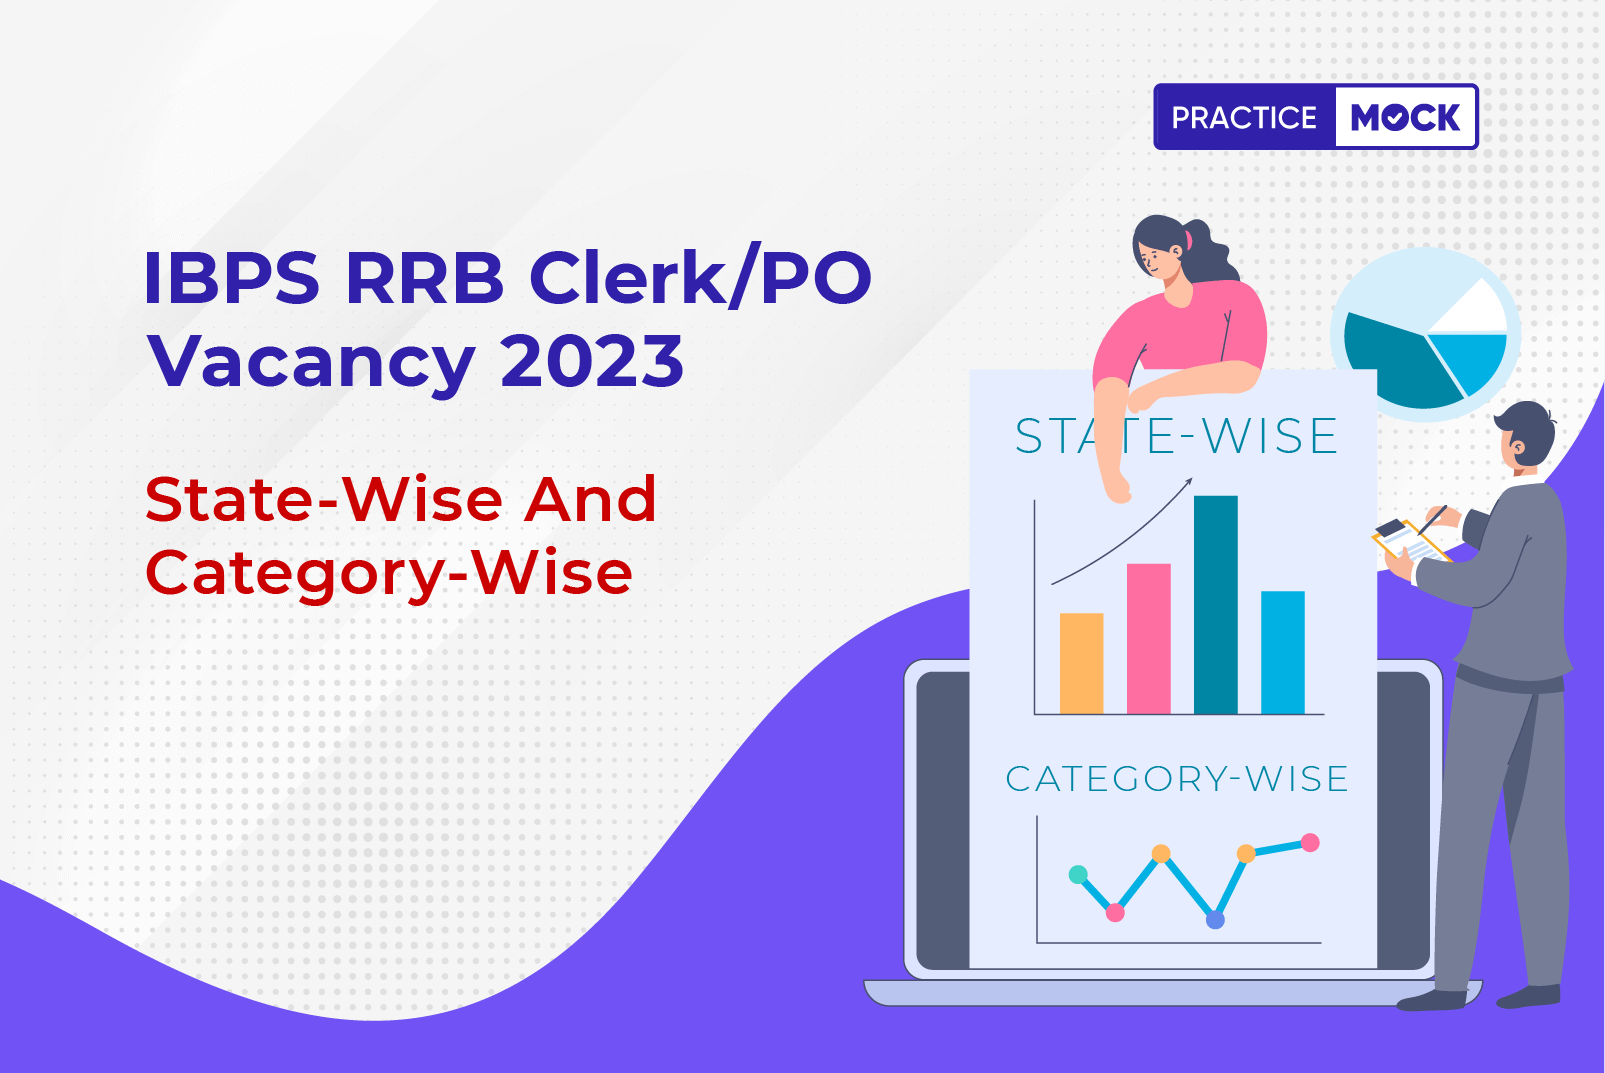 IBPS RRB PO/Clerk Vacancy 2023